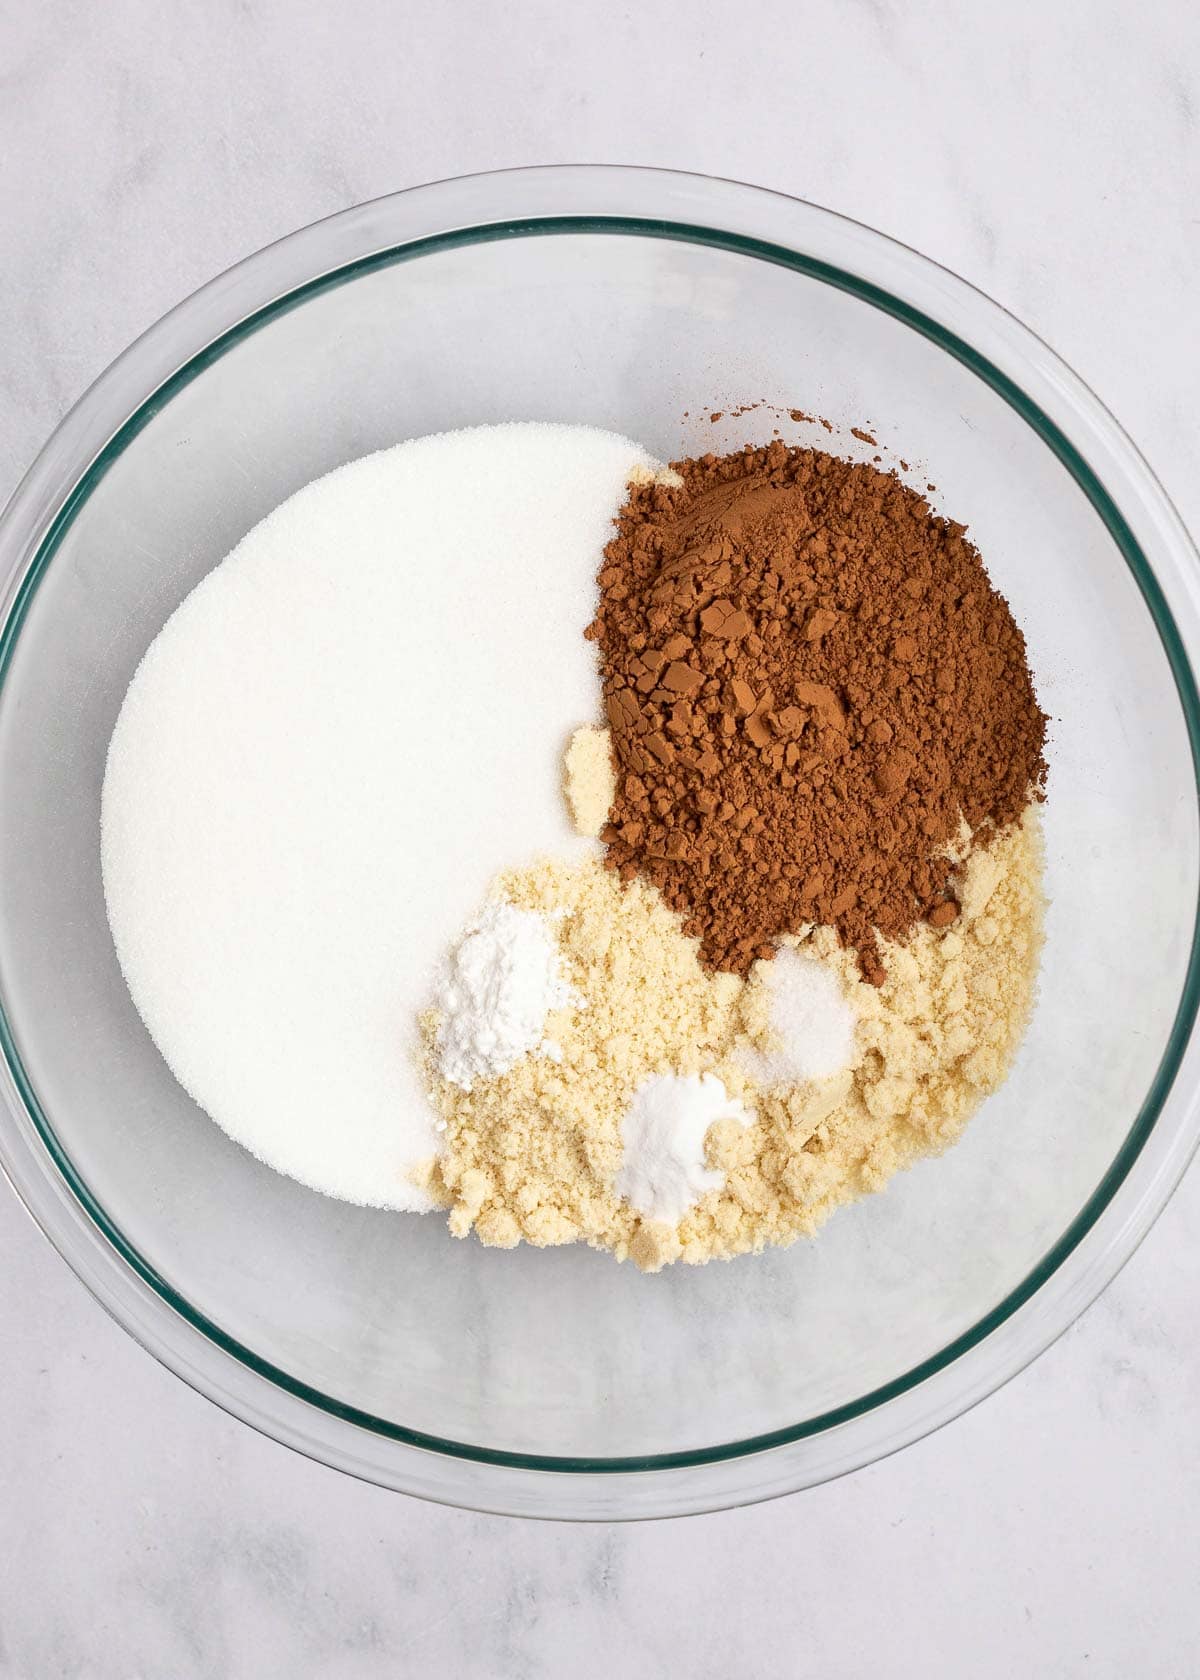 A mixing bowl filled with almond flour, cocoa powder, monk fruit sweetener, salt, baking powder, and baking soda